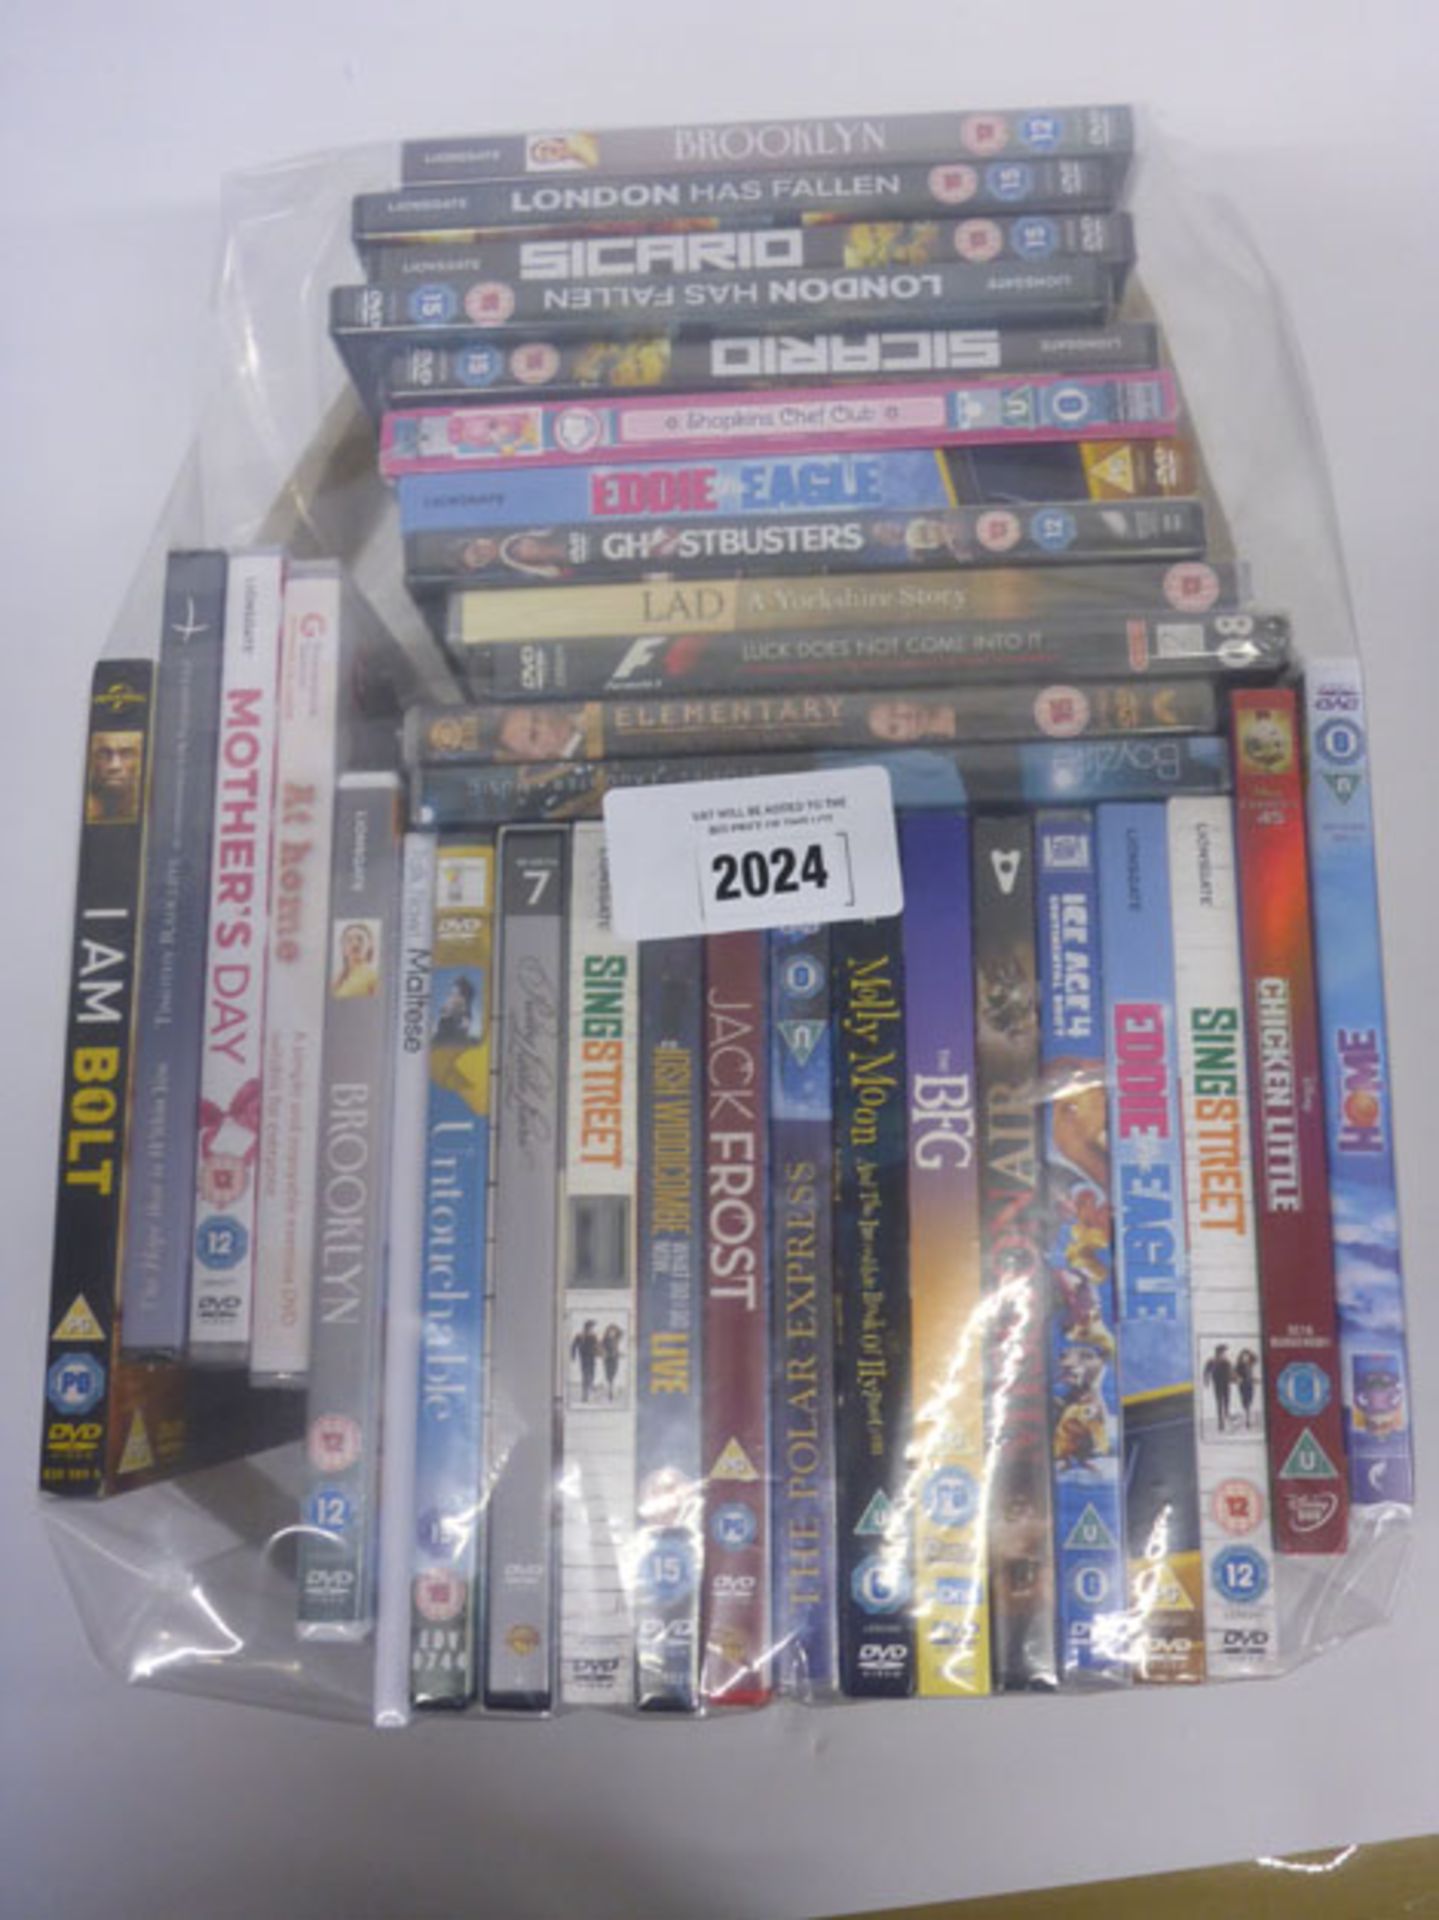 Bag containing 32 various DVD film titles